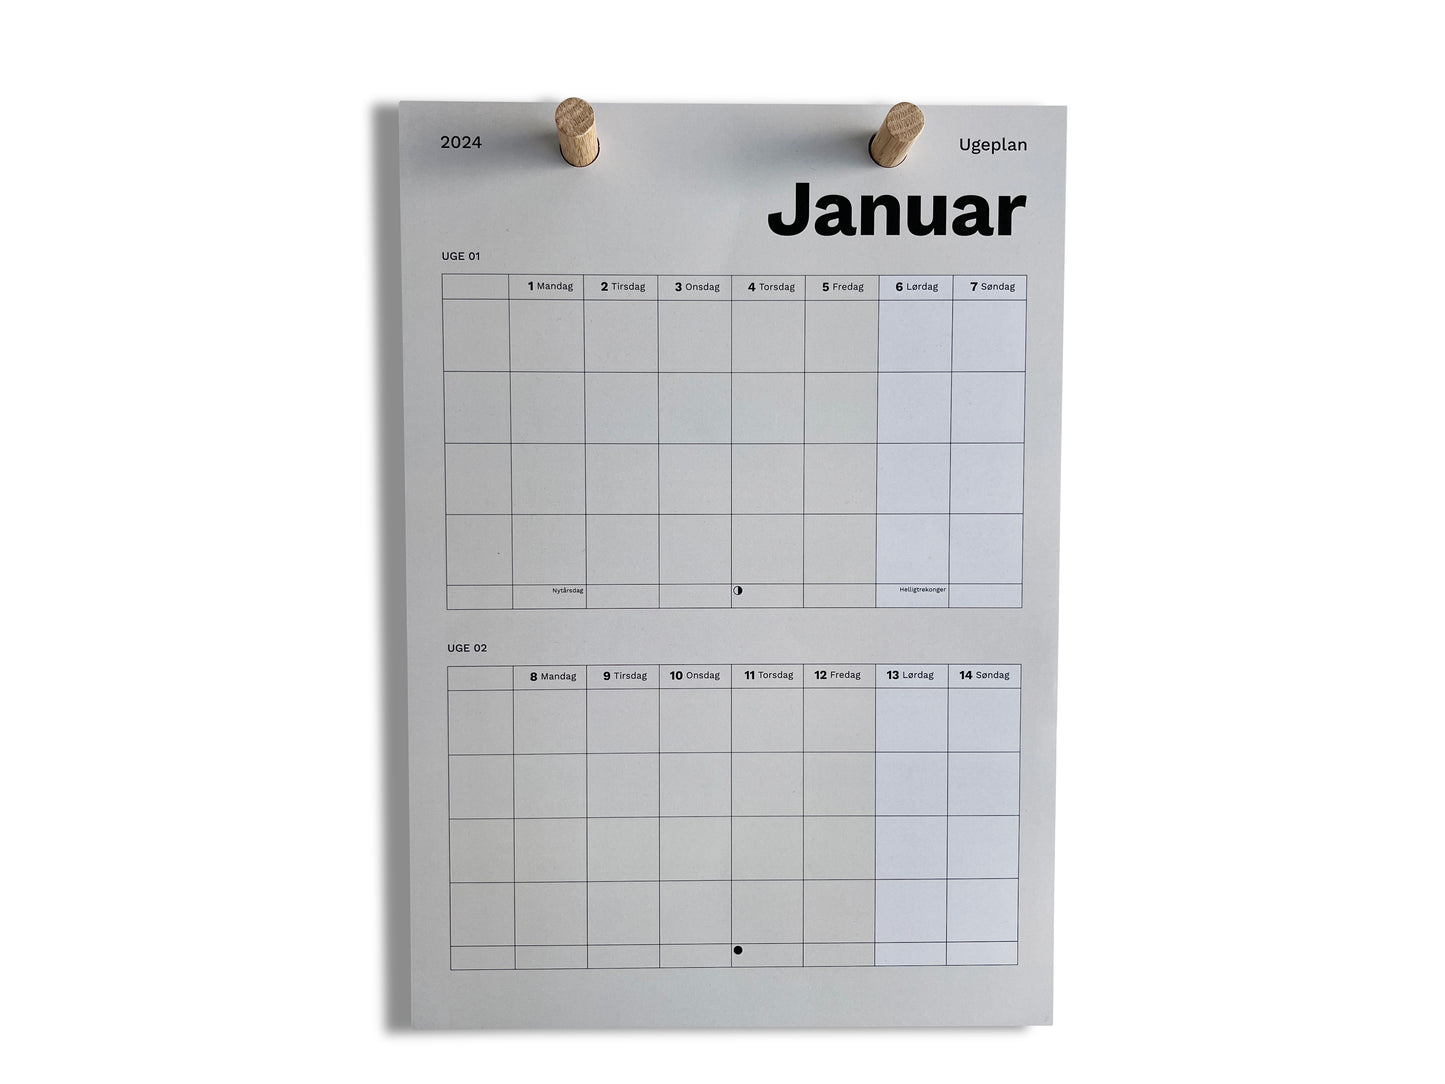 Biweekly calendar: 4 rows